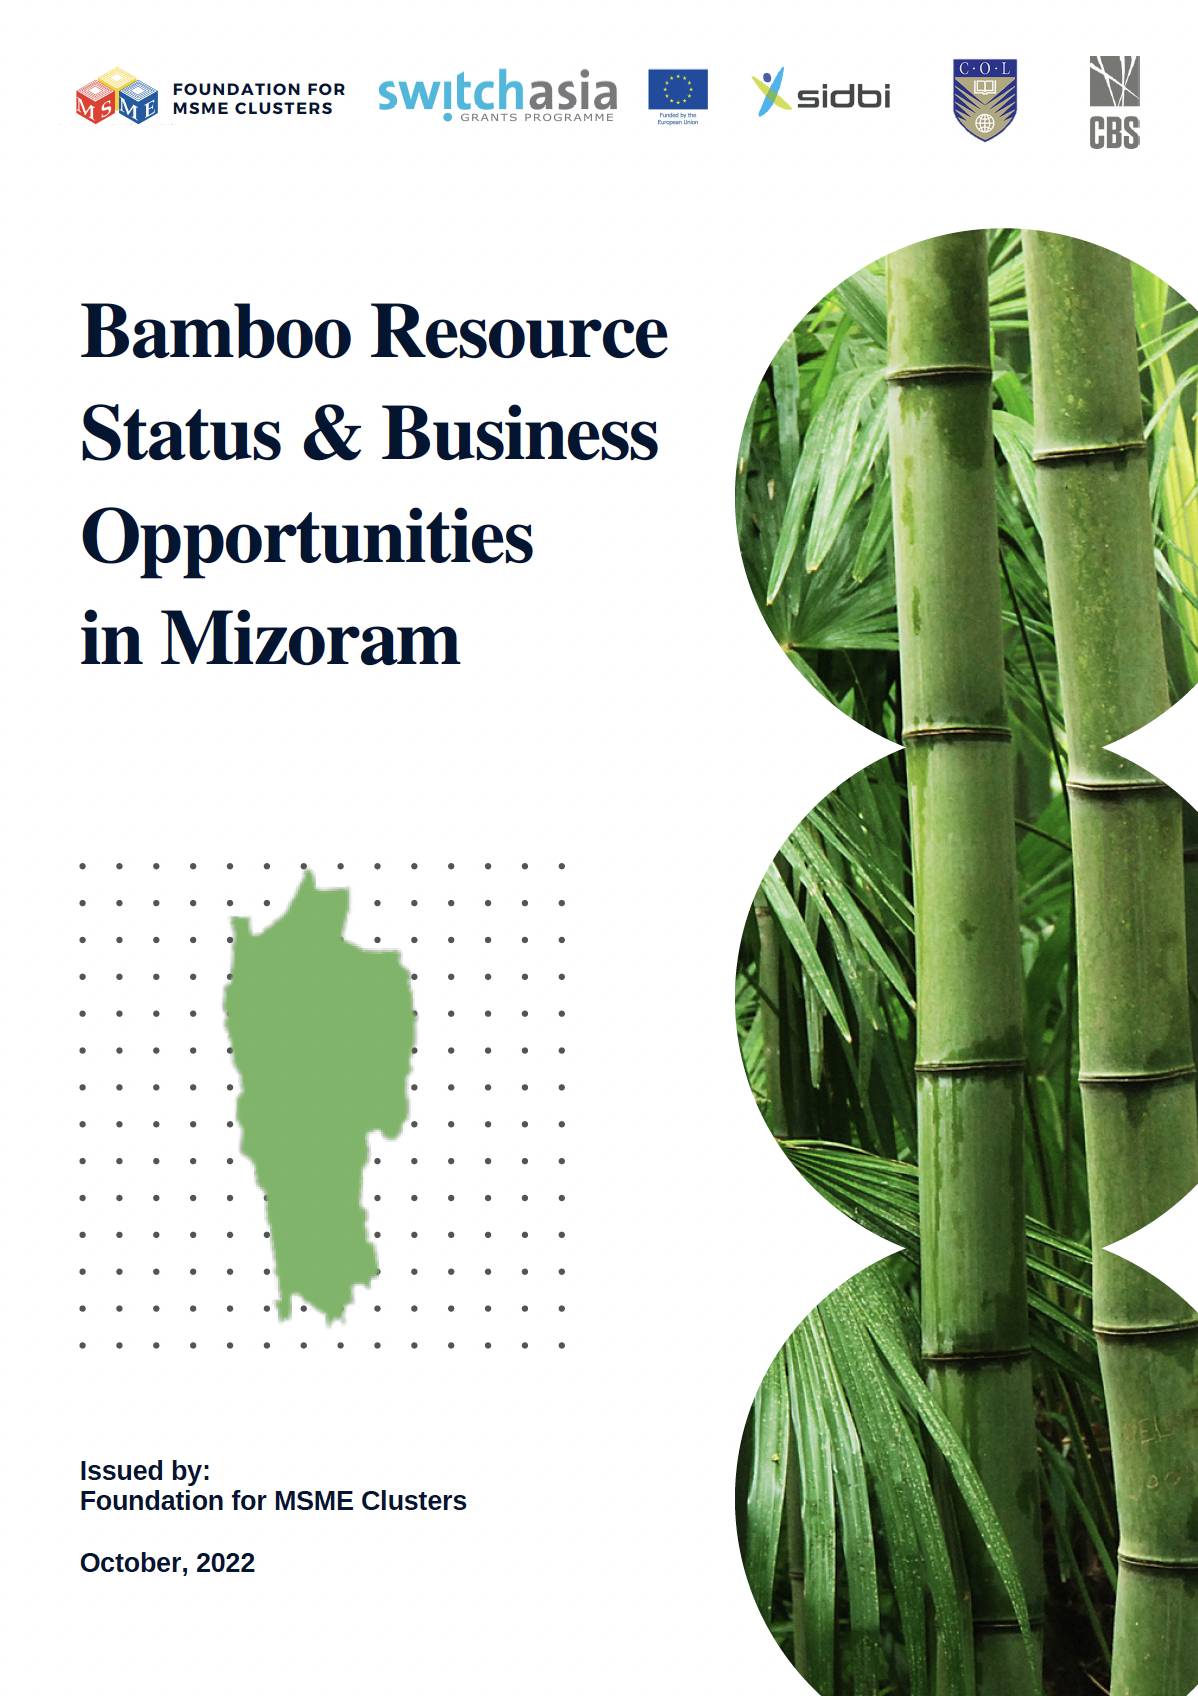 Bamboo Resource Status & Business Opportunities in Mizoram